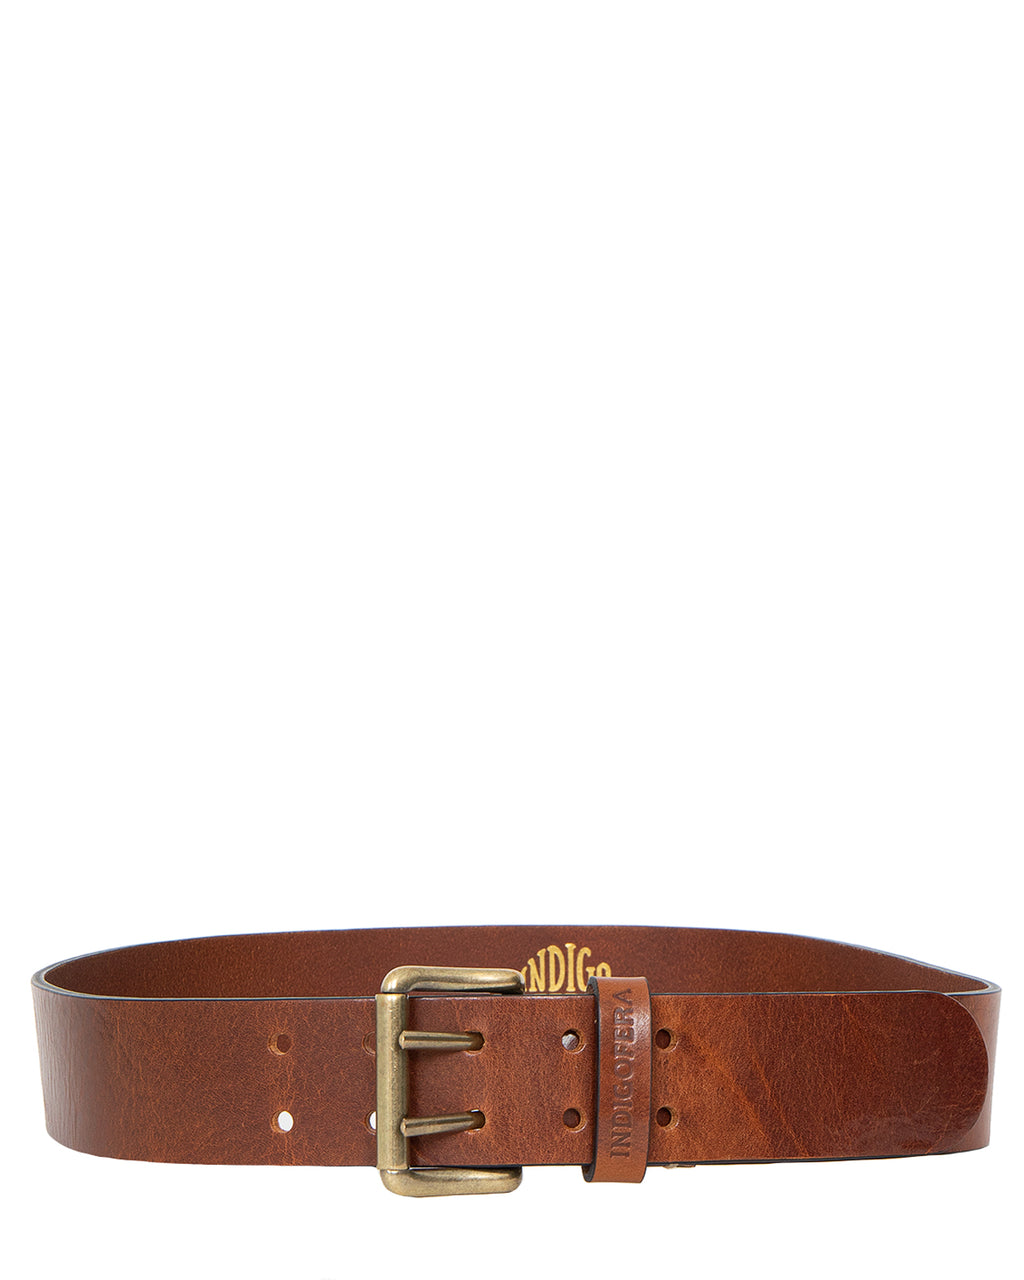 Indigofera Danko Leather Belt, Brown